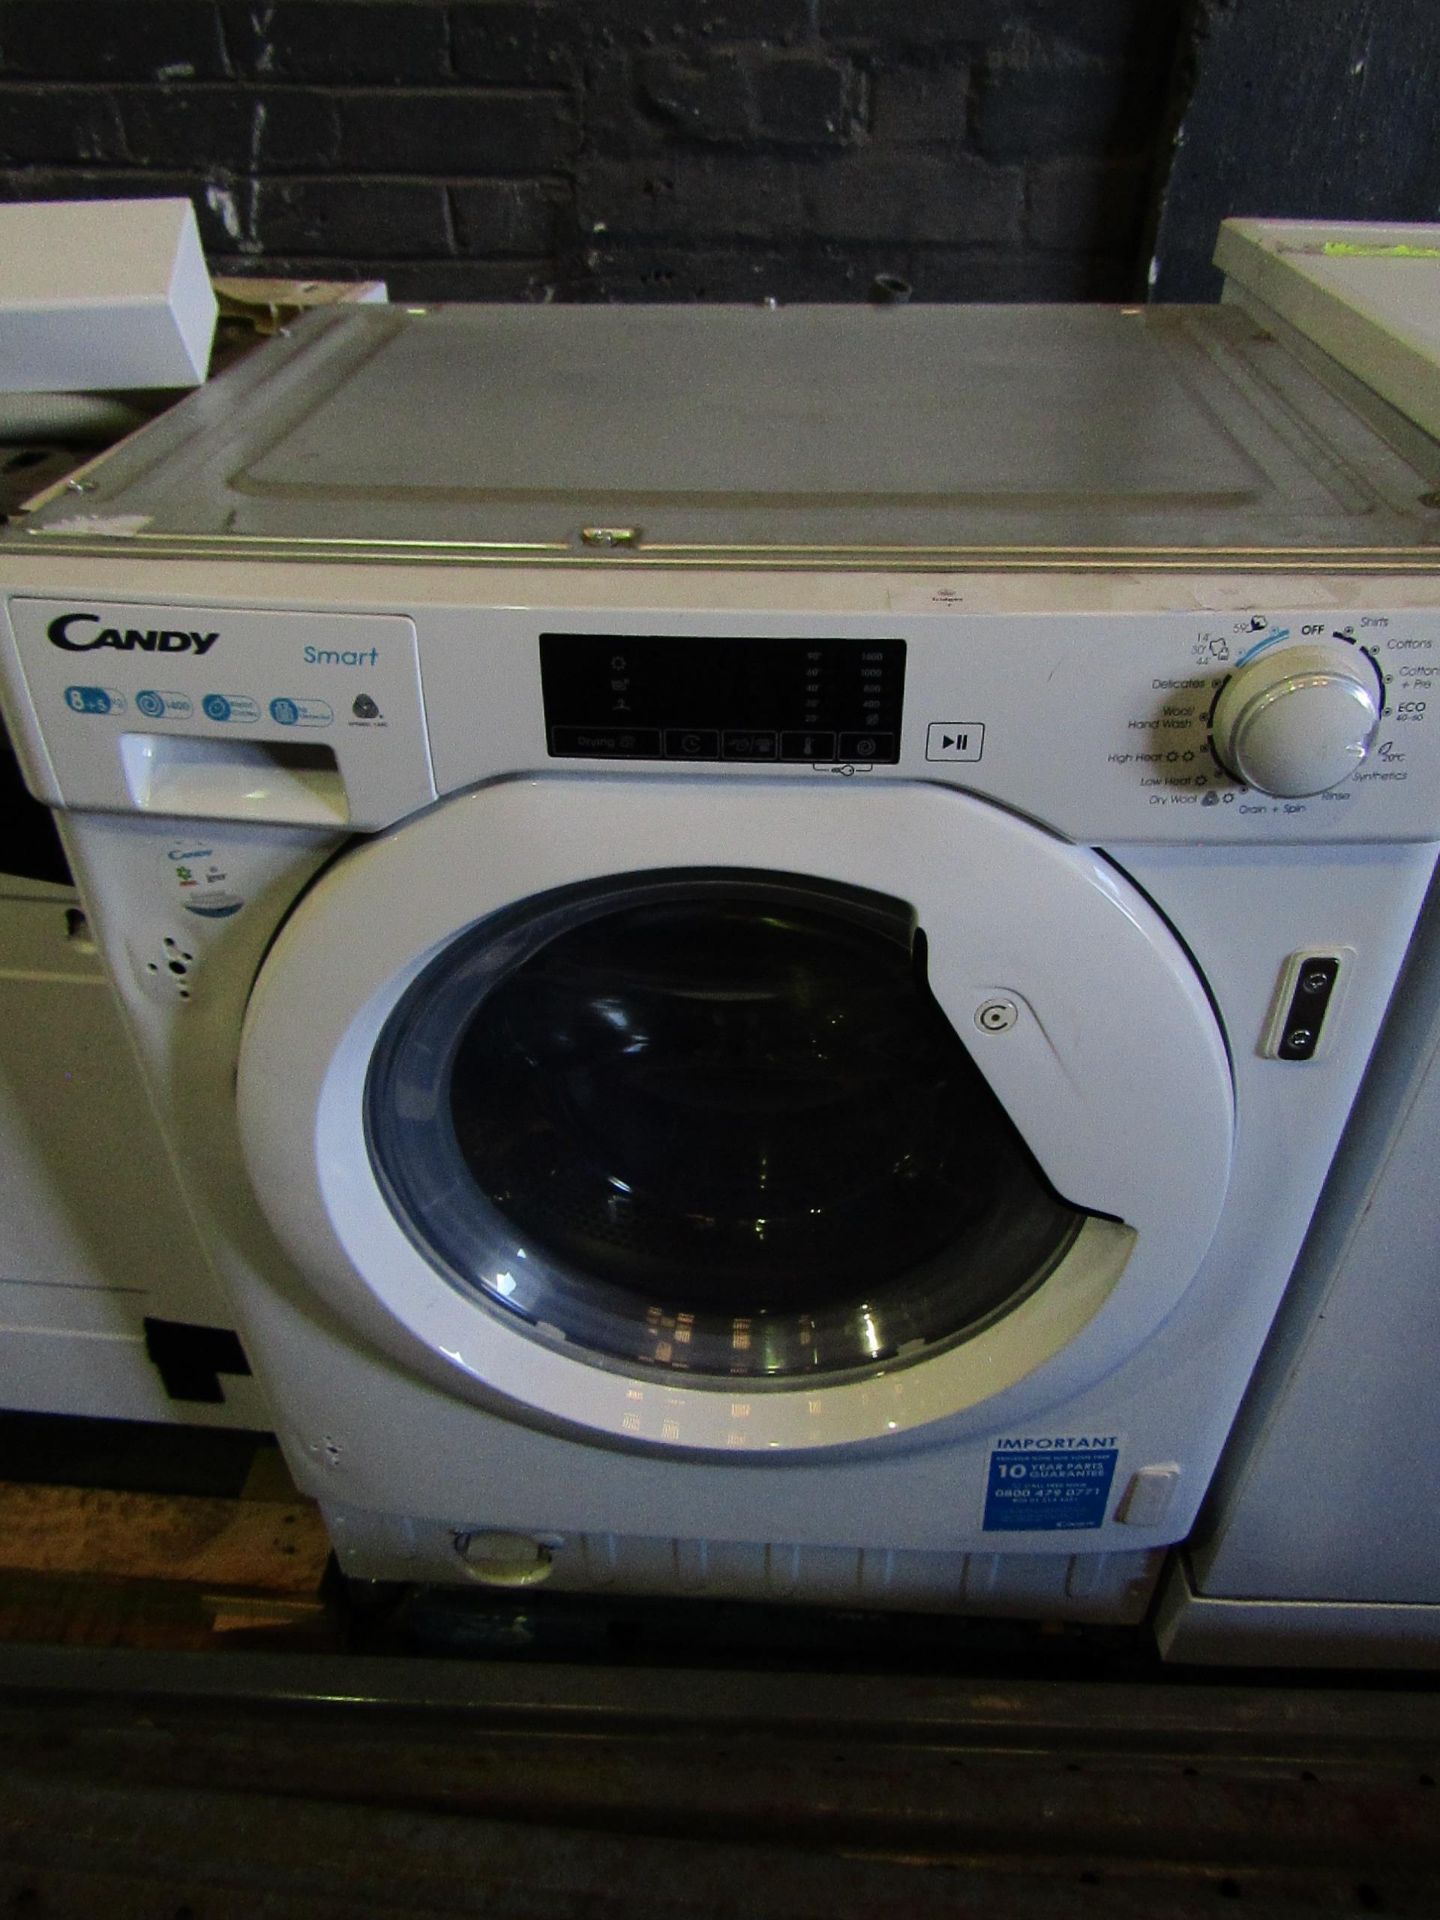 Candy Slim line washing machine, unable to check as has a damgfed plug